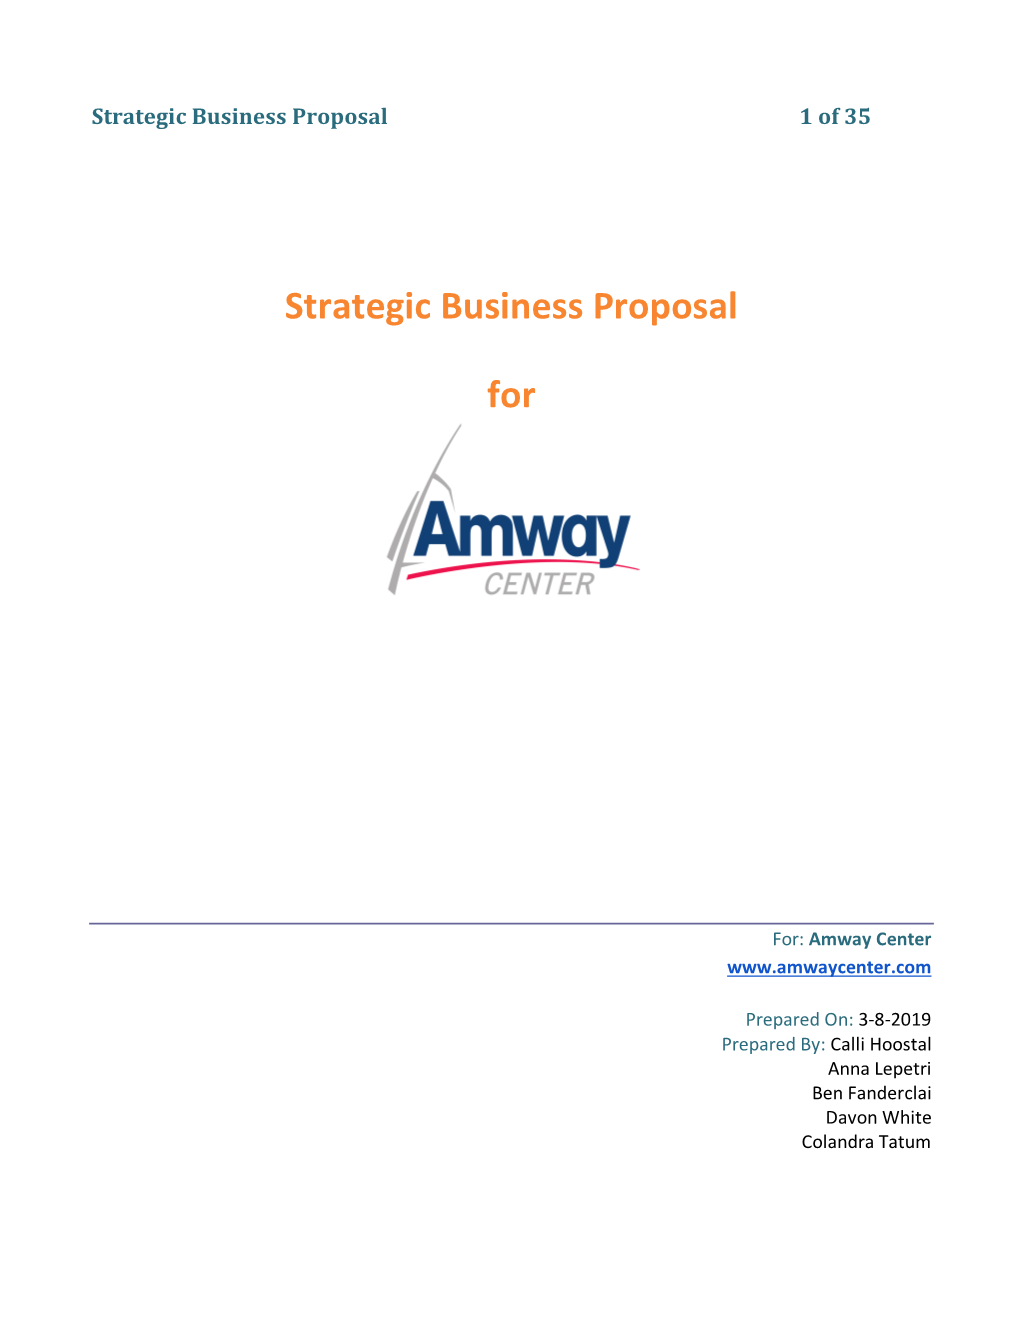 Amway Center Proposal Final 2